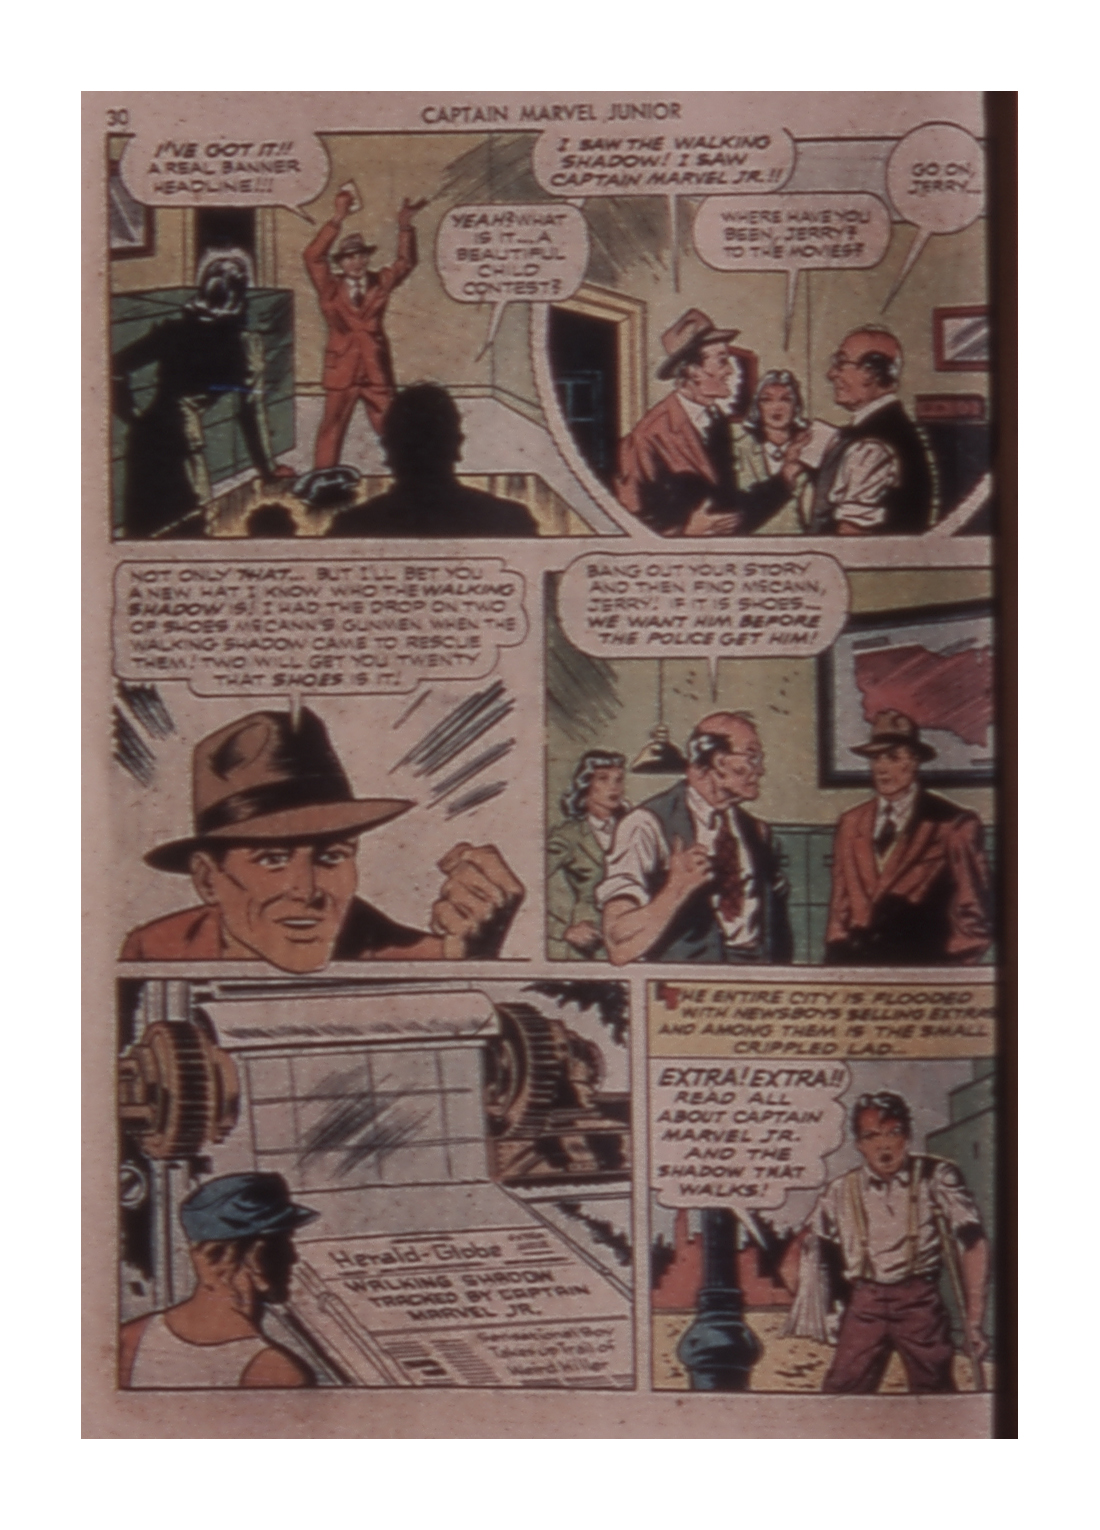 Read online Captain Marvel, Jr. comic -  Issue #1 - 30